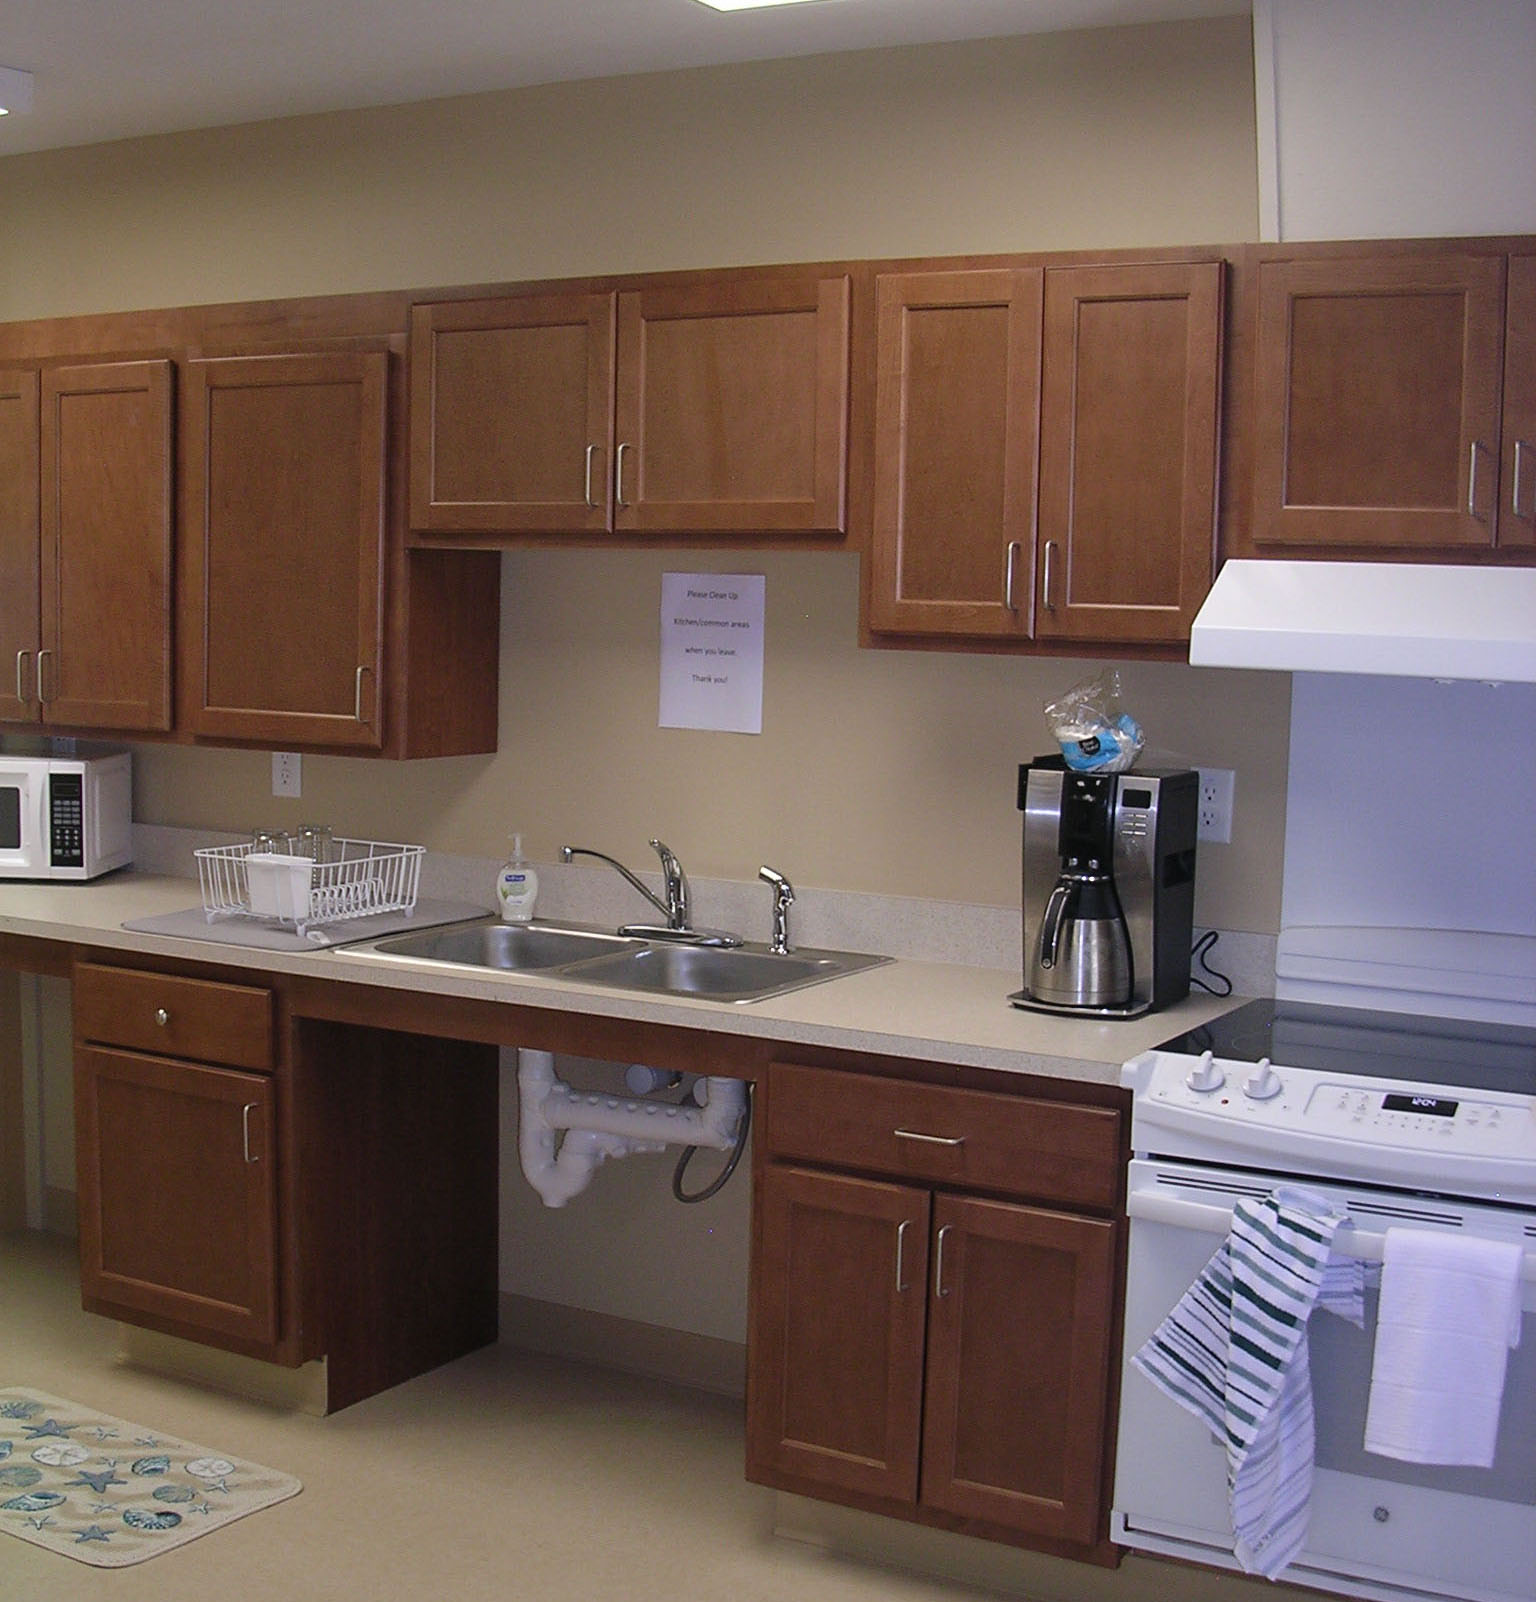 property management company client list syracuse ny community room kitchen image of island hollow senior apartments